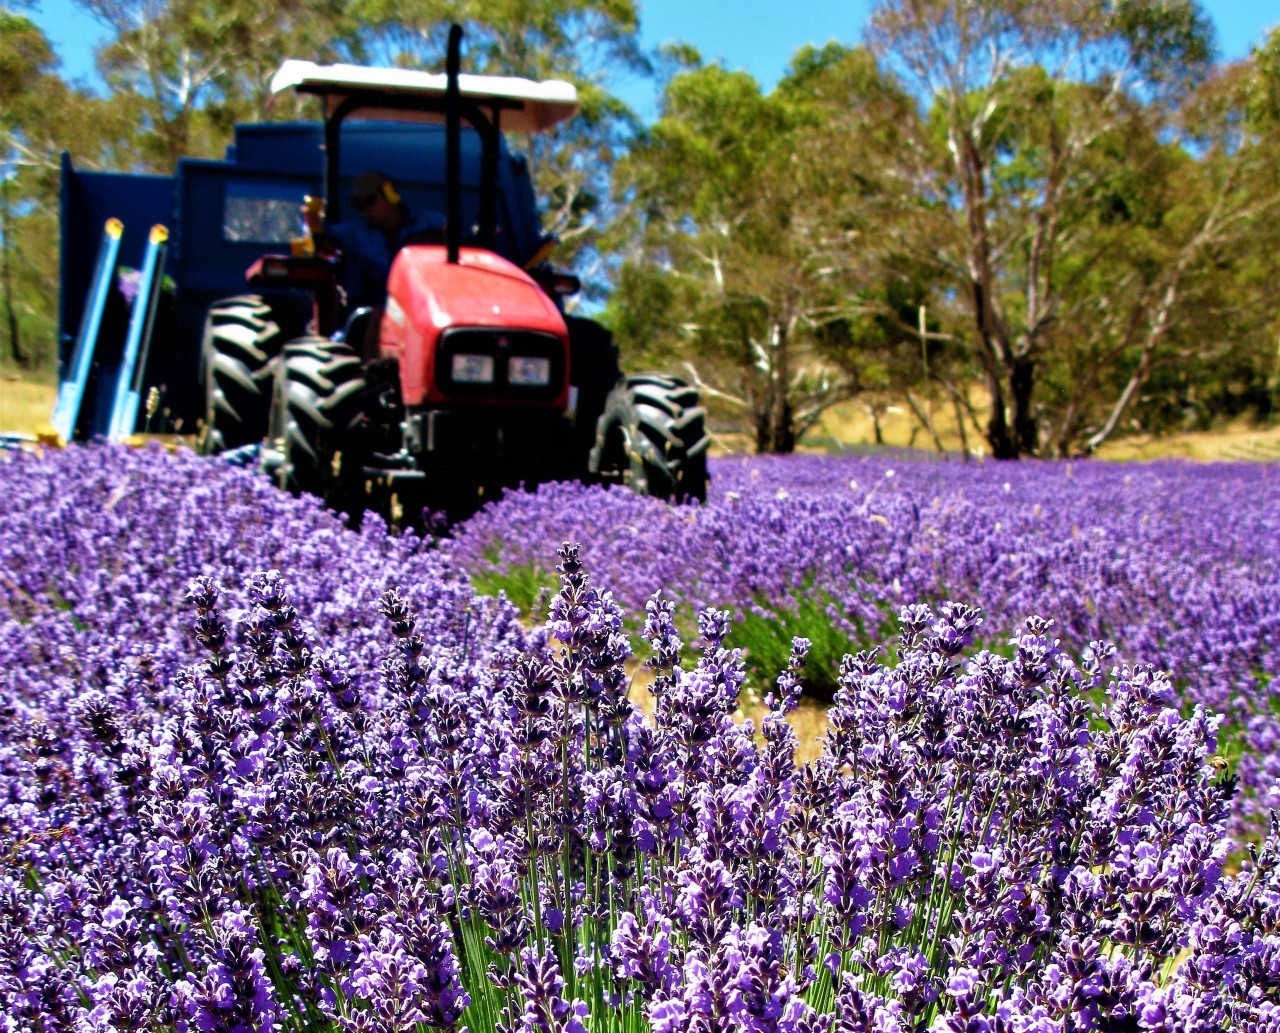 Australia's lavender industry is booming